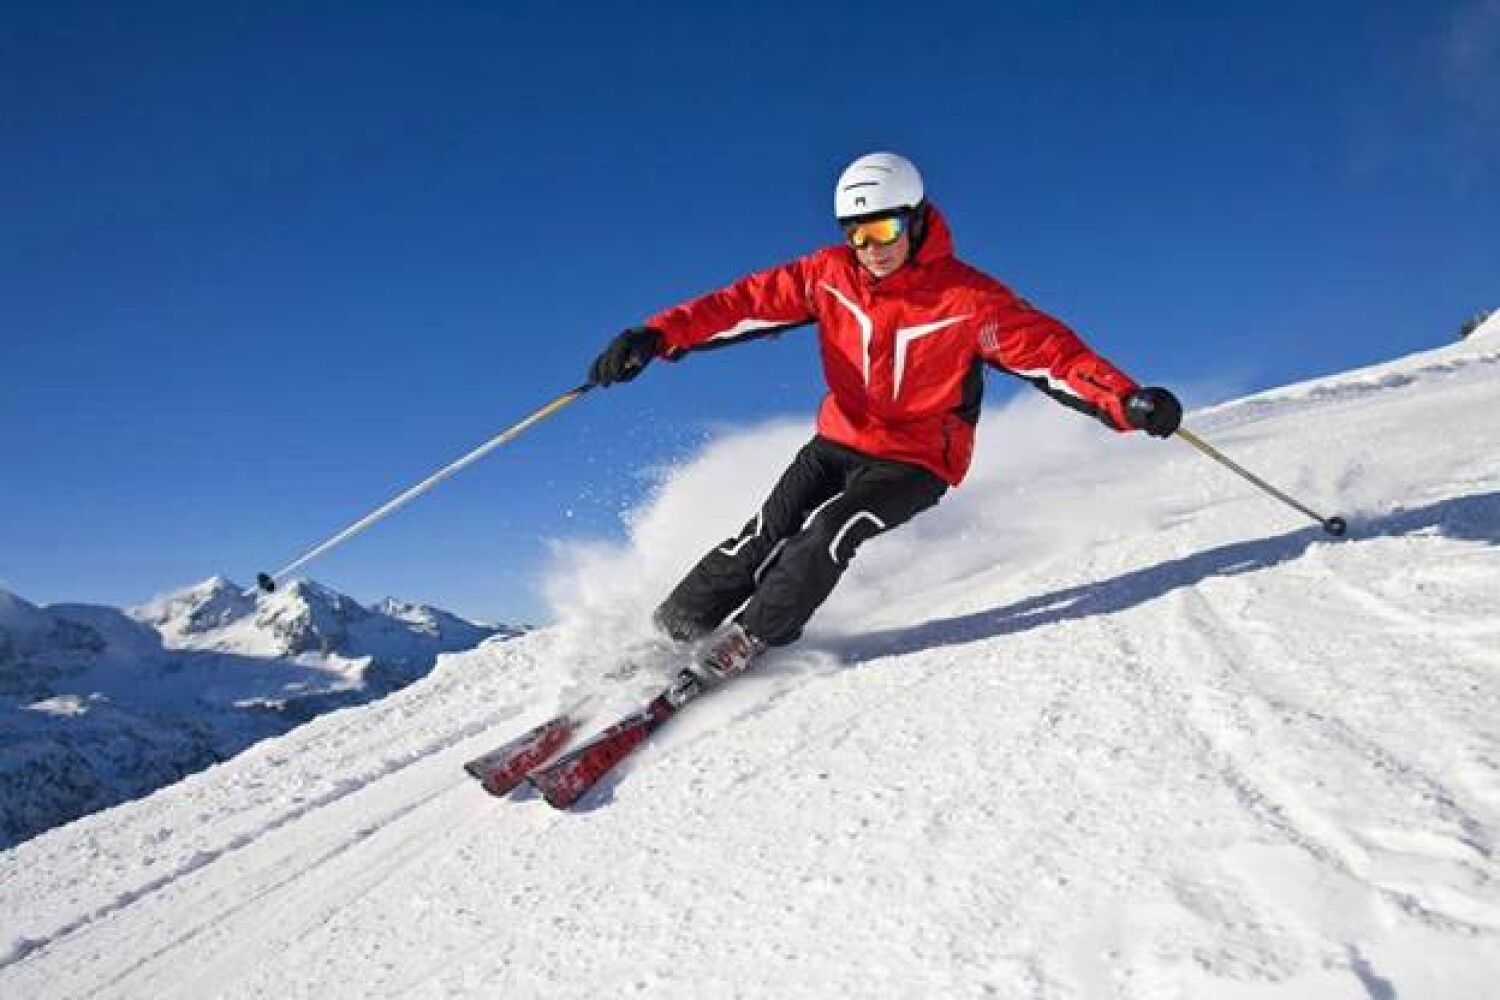 Great skiing. Горнолыжный спорт. Горные лыжи. Горнолыжник. Горные лыжи спорт.